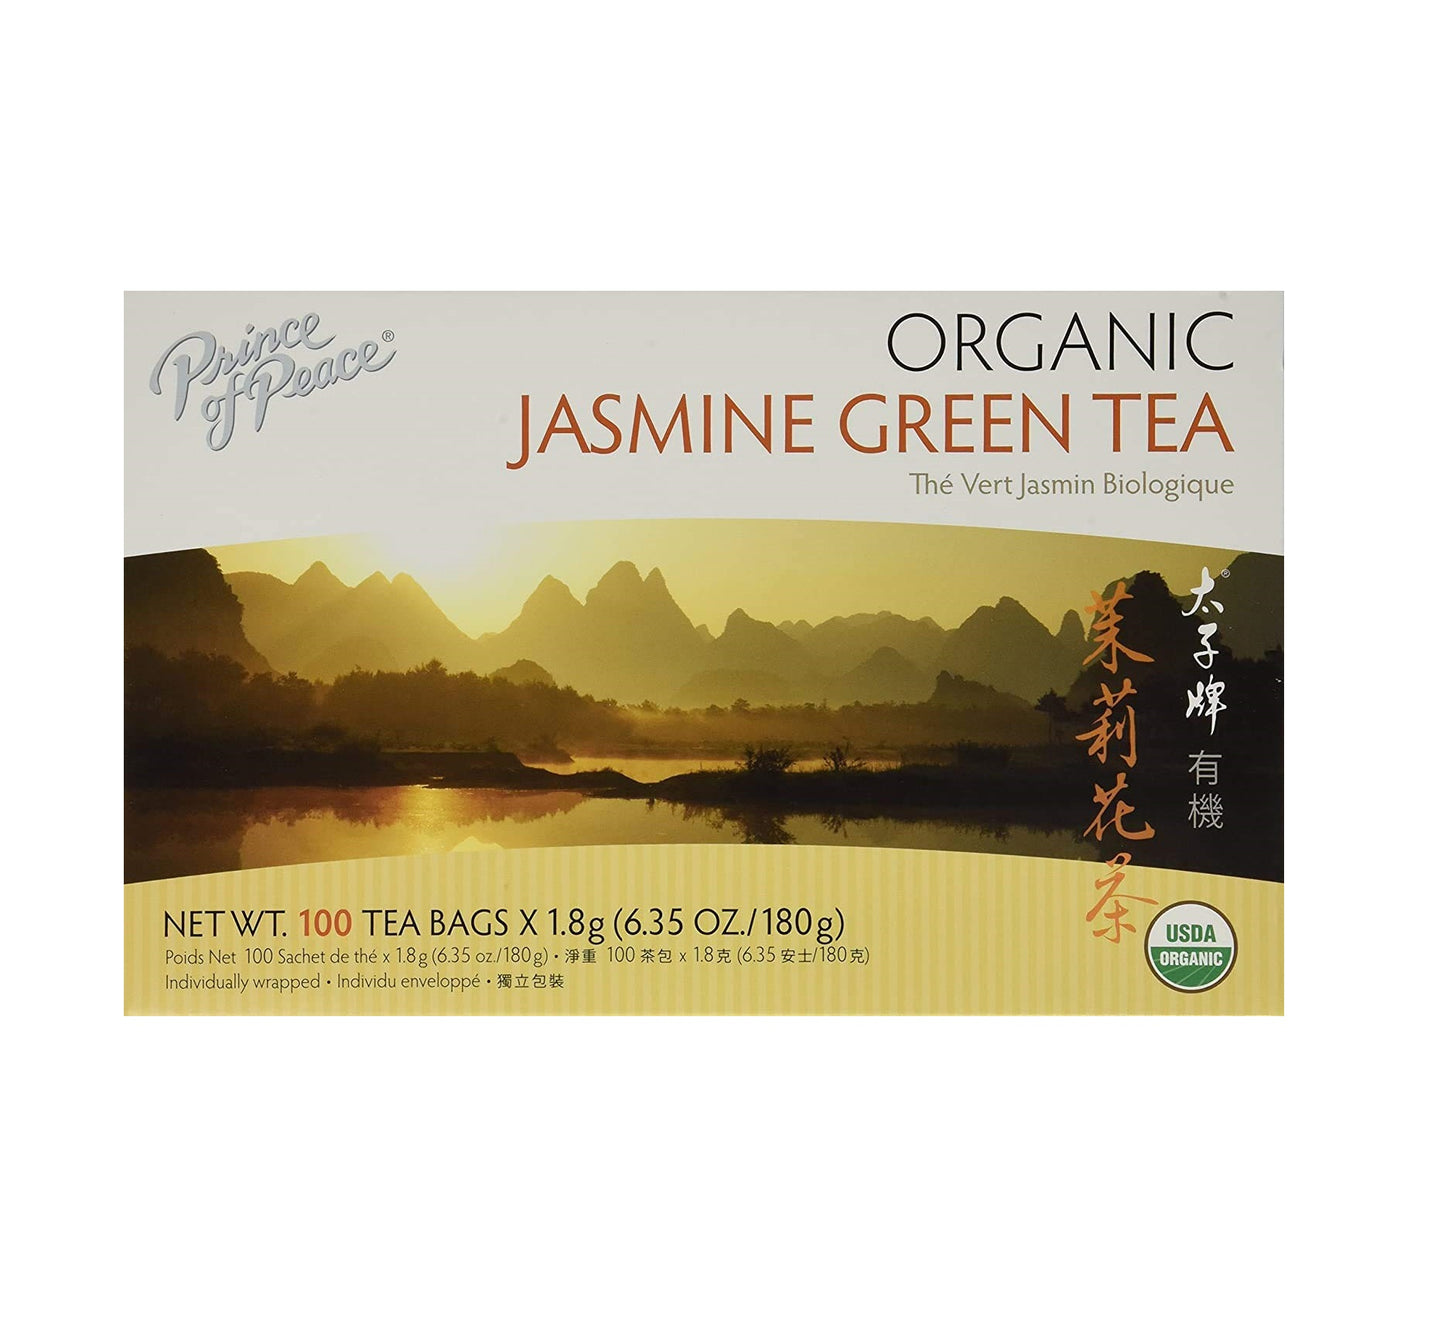 Prince of Peace Organic Jasmine Green Tea